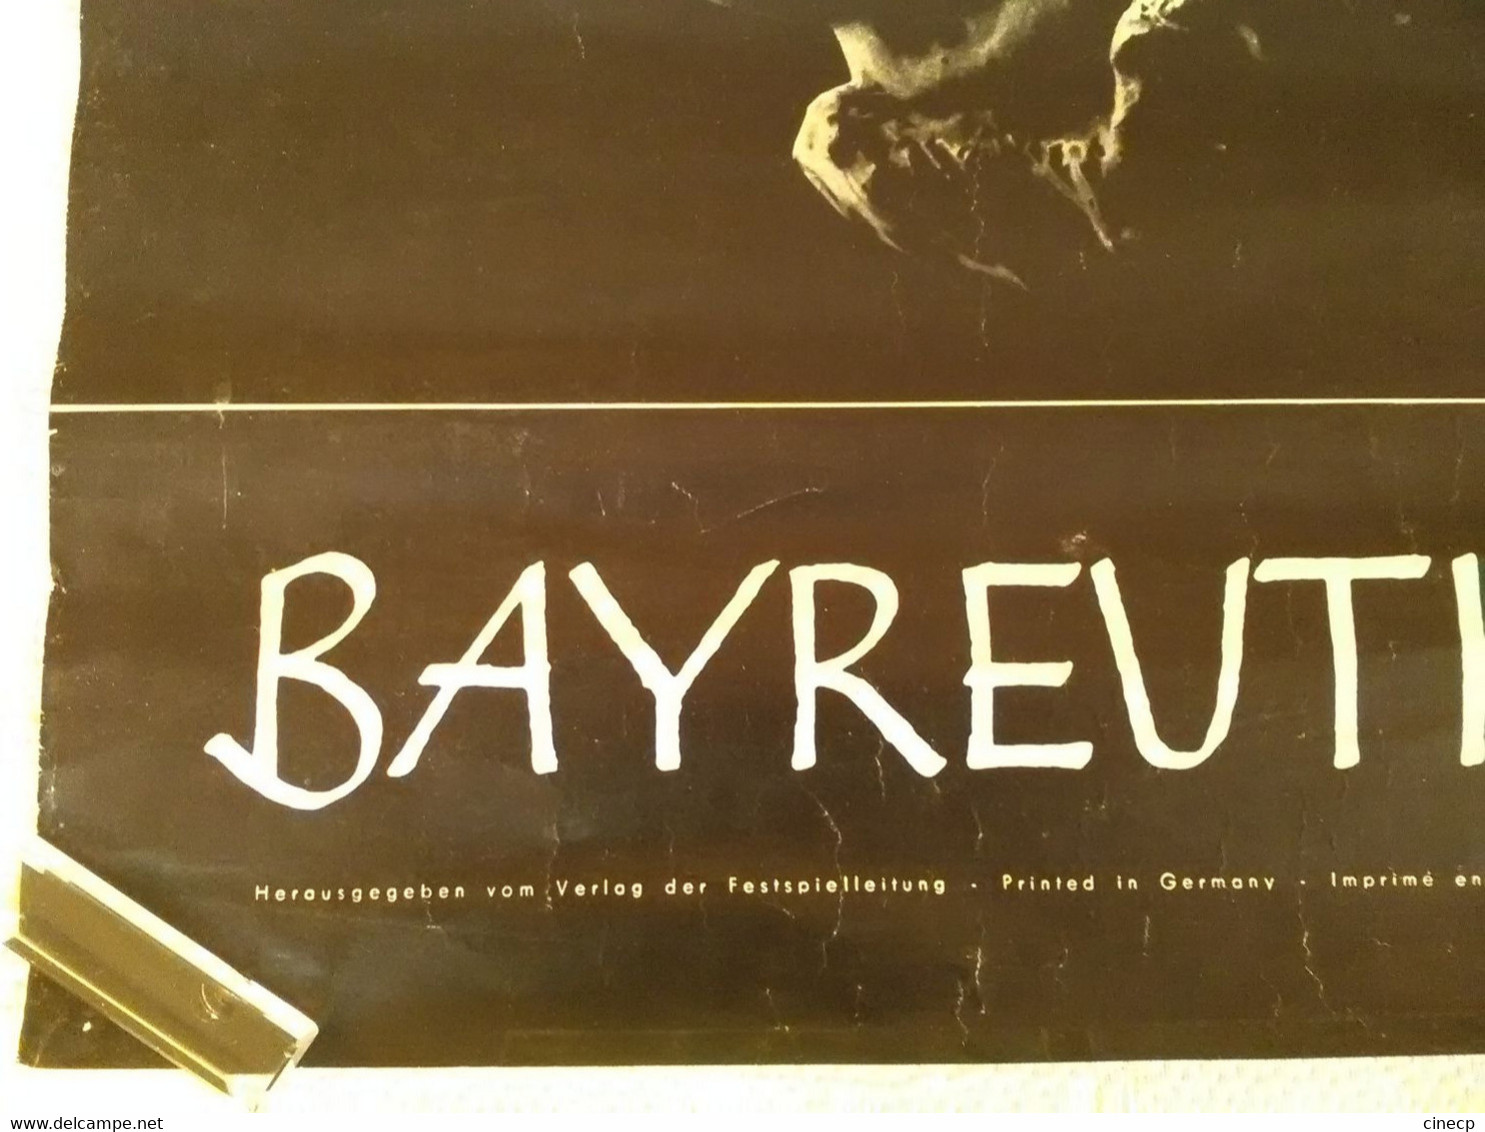 AFFICHE ORIGINALE FESTIVAL BAYREUTH 1955 MUSIQUE PROFIL WAGNER - Affiches & Posters